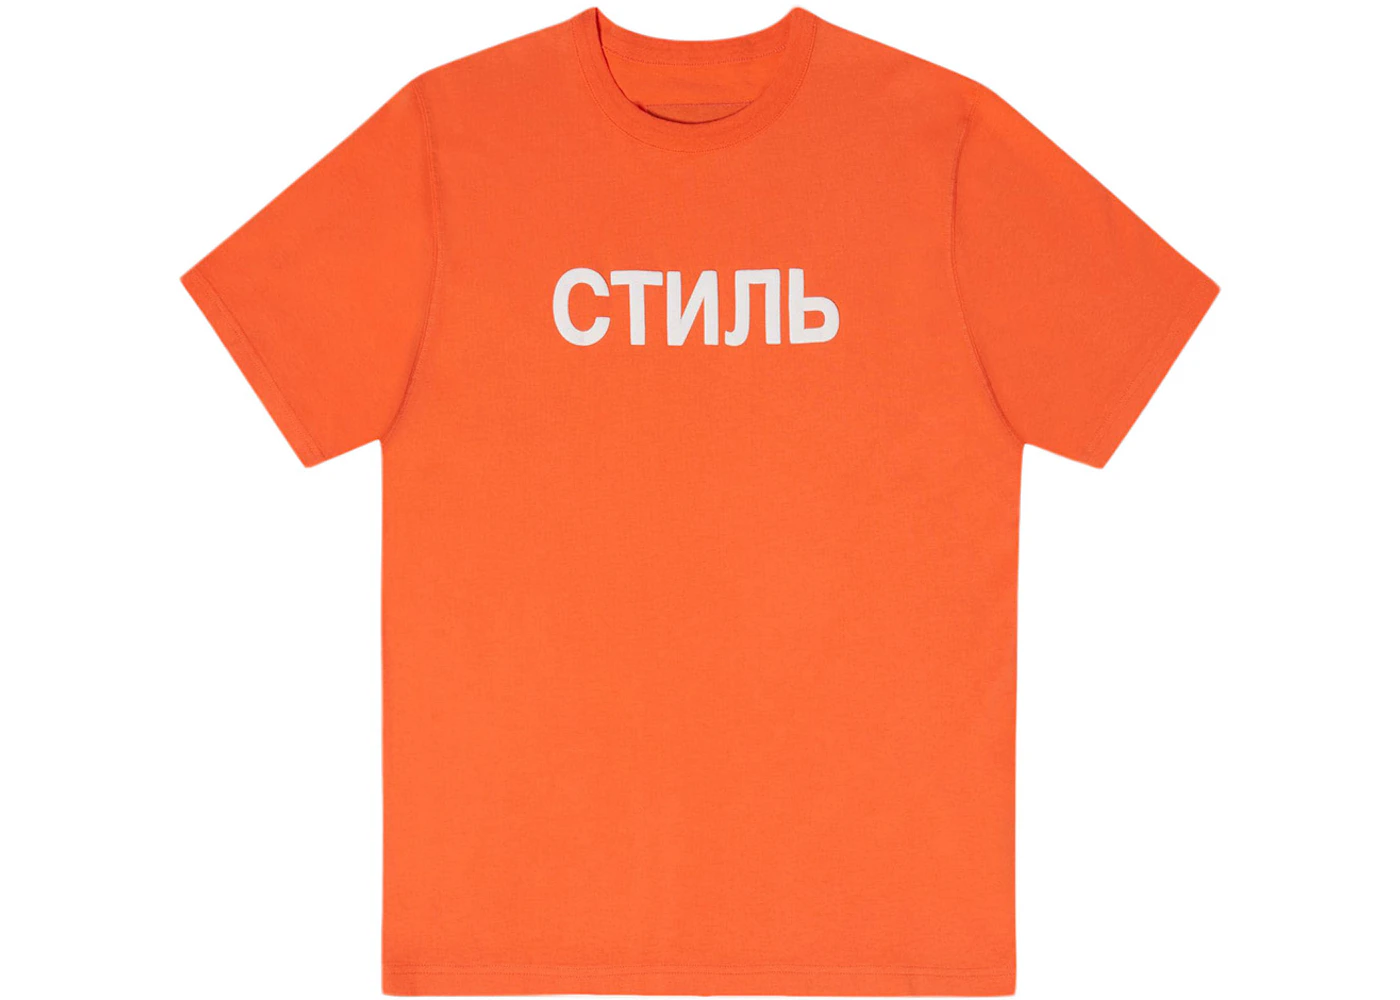 Heron Preston NF CTNMB Tee T-Shirt Orange/White Men's - FW22 - US